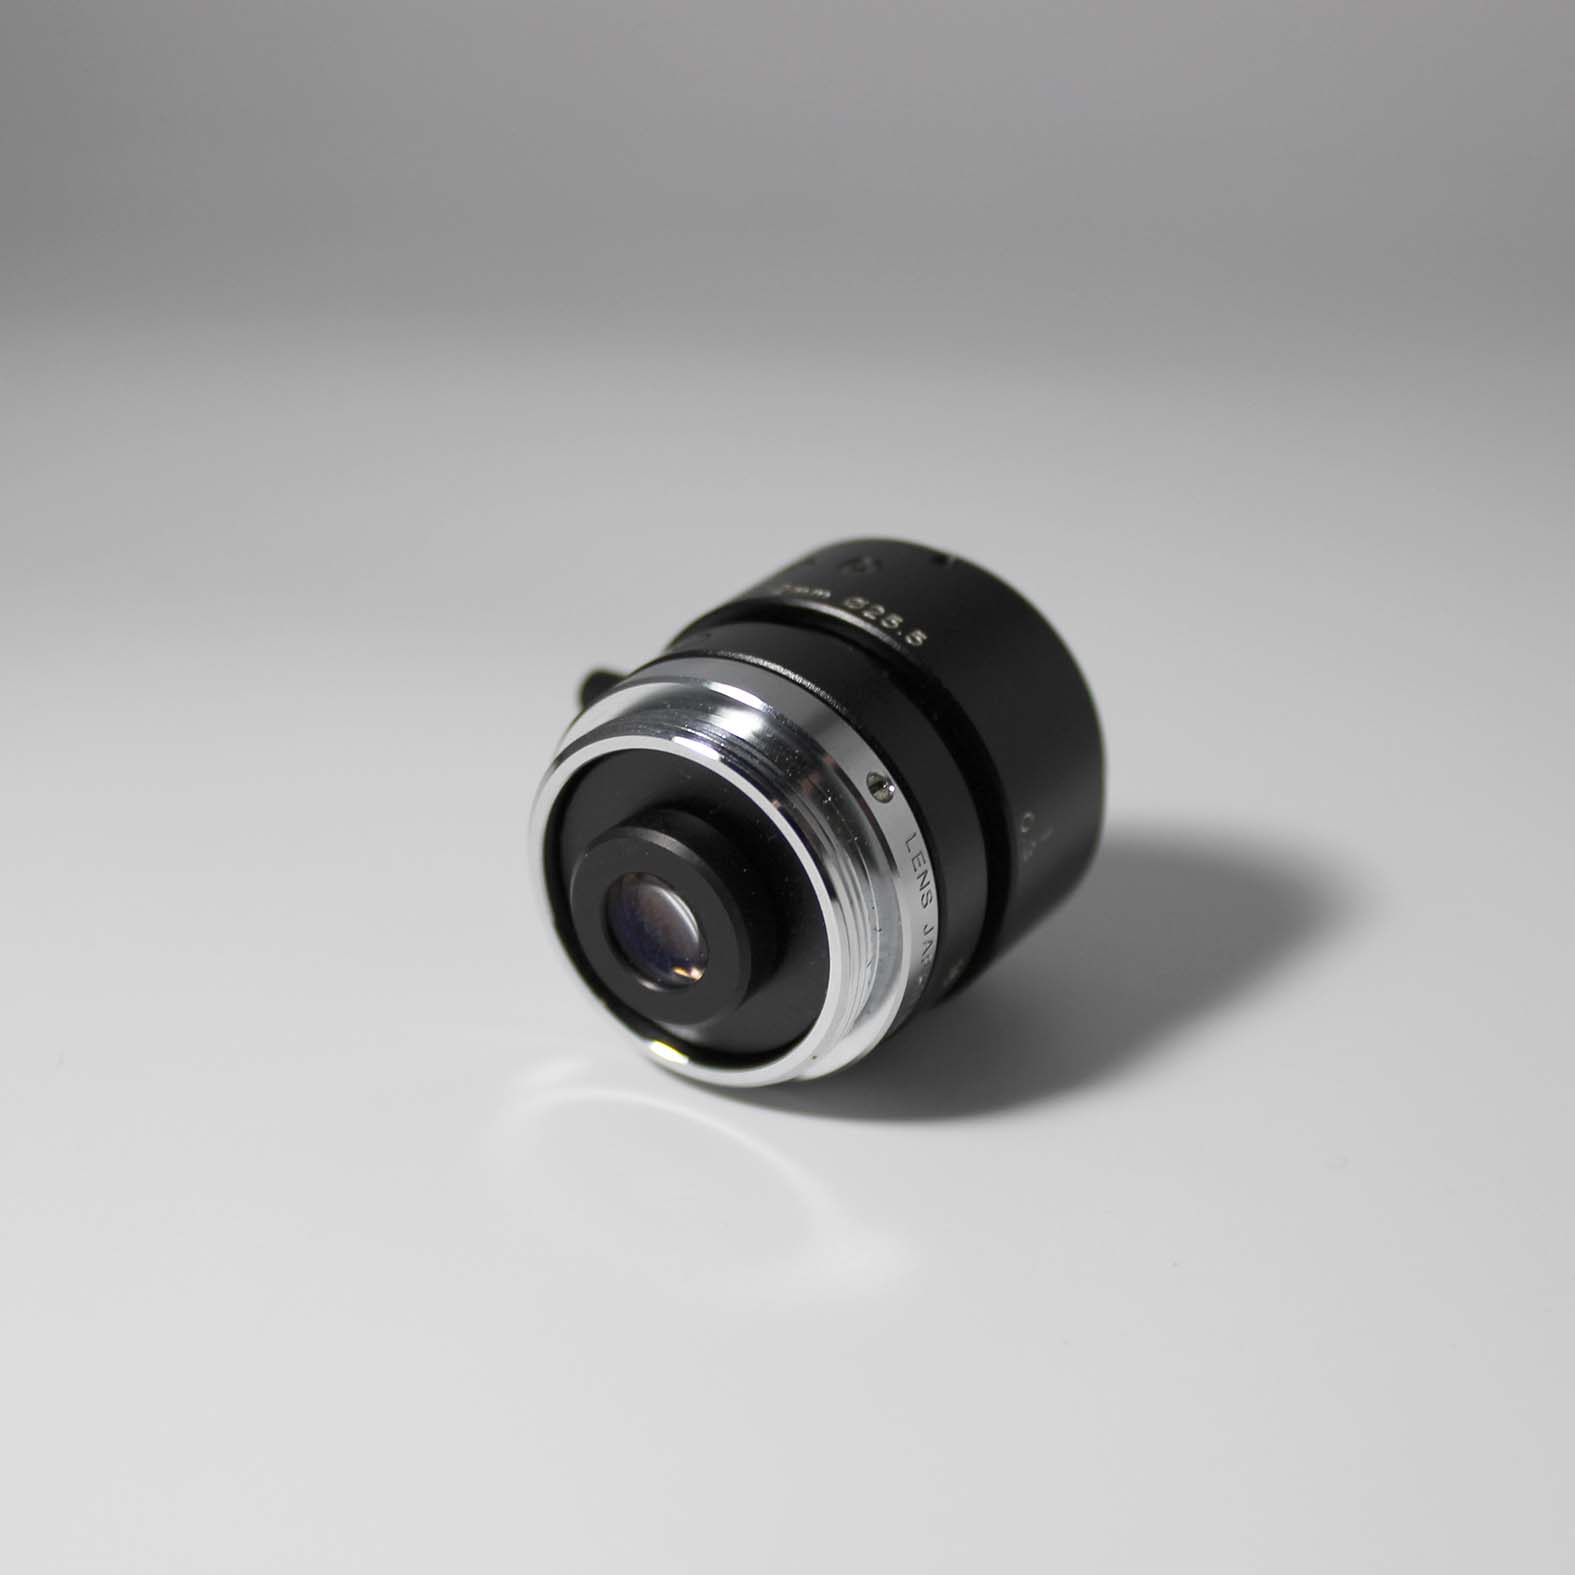 China Supplier High Quality Manual Iris Lens for Camera 25HB Tamron Lens